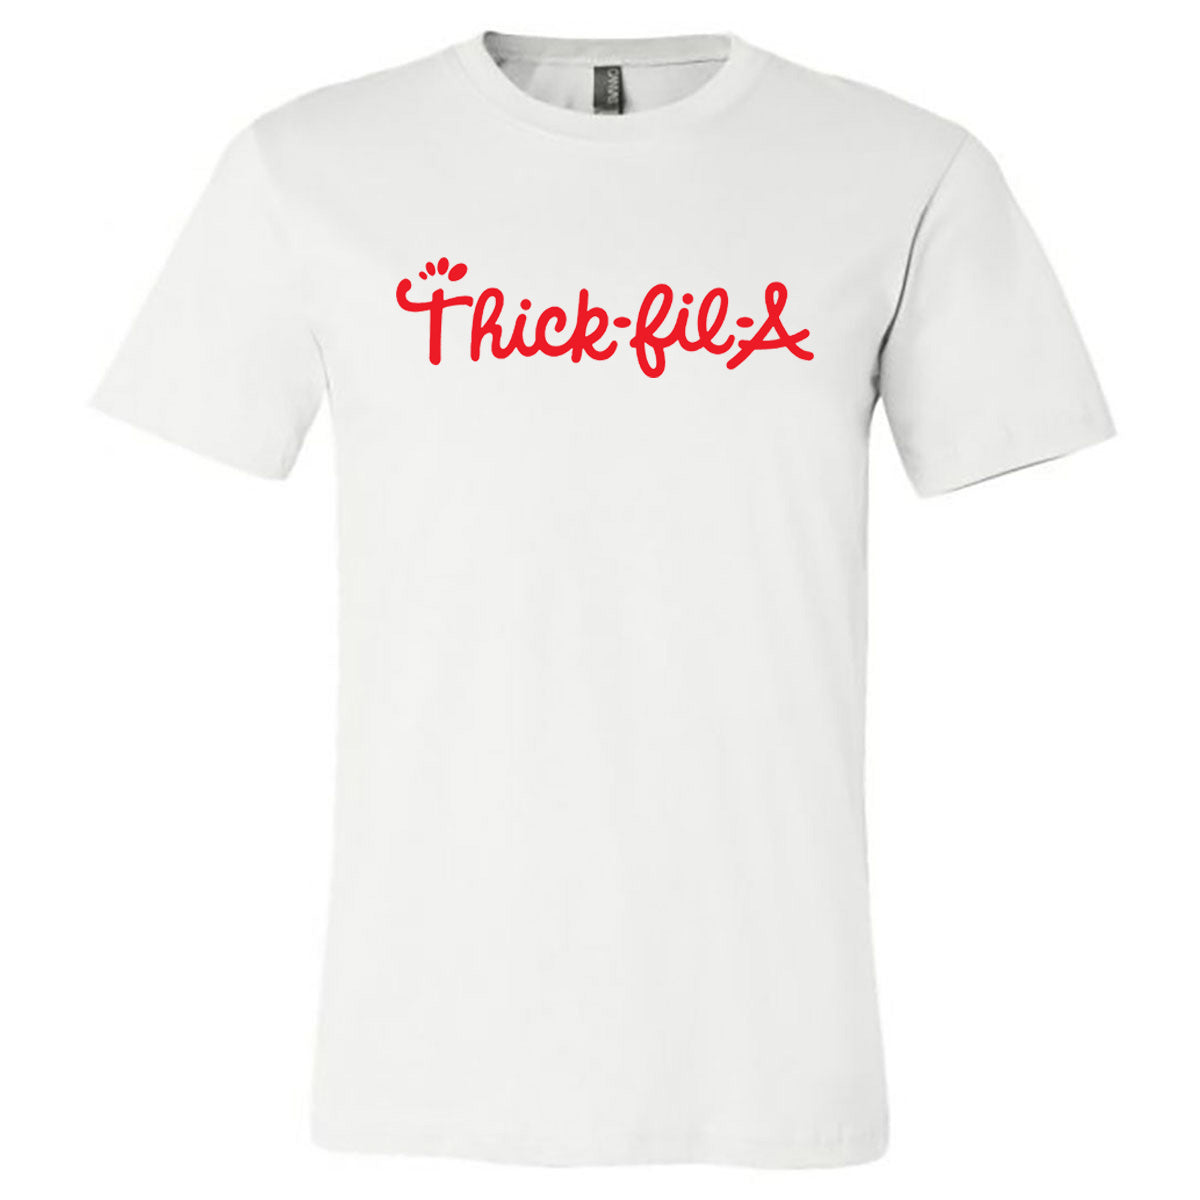 Thick-Fil-A - White (Tee/Hoodie/Tank/Sweatshirt) - Southern Grace Creations